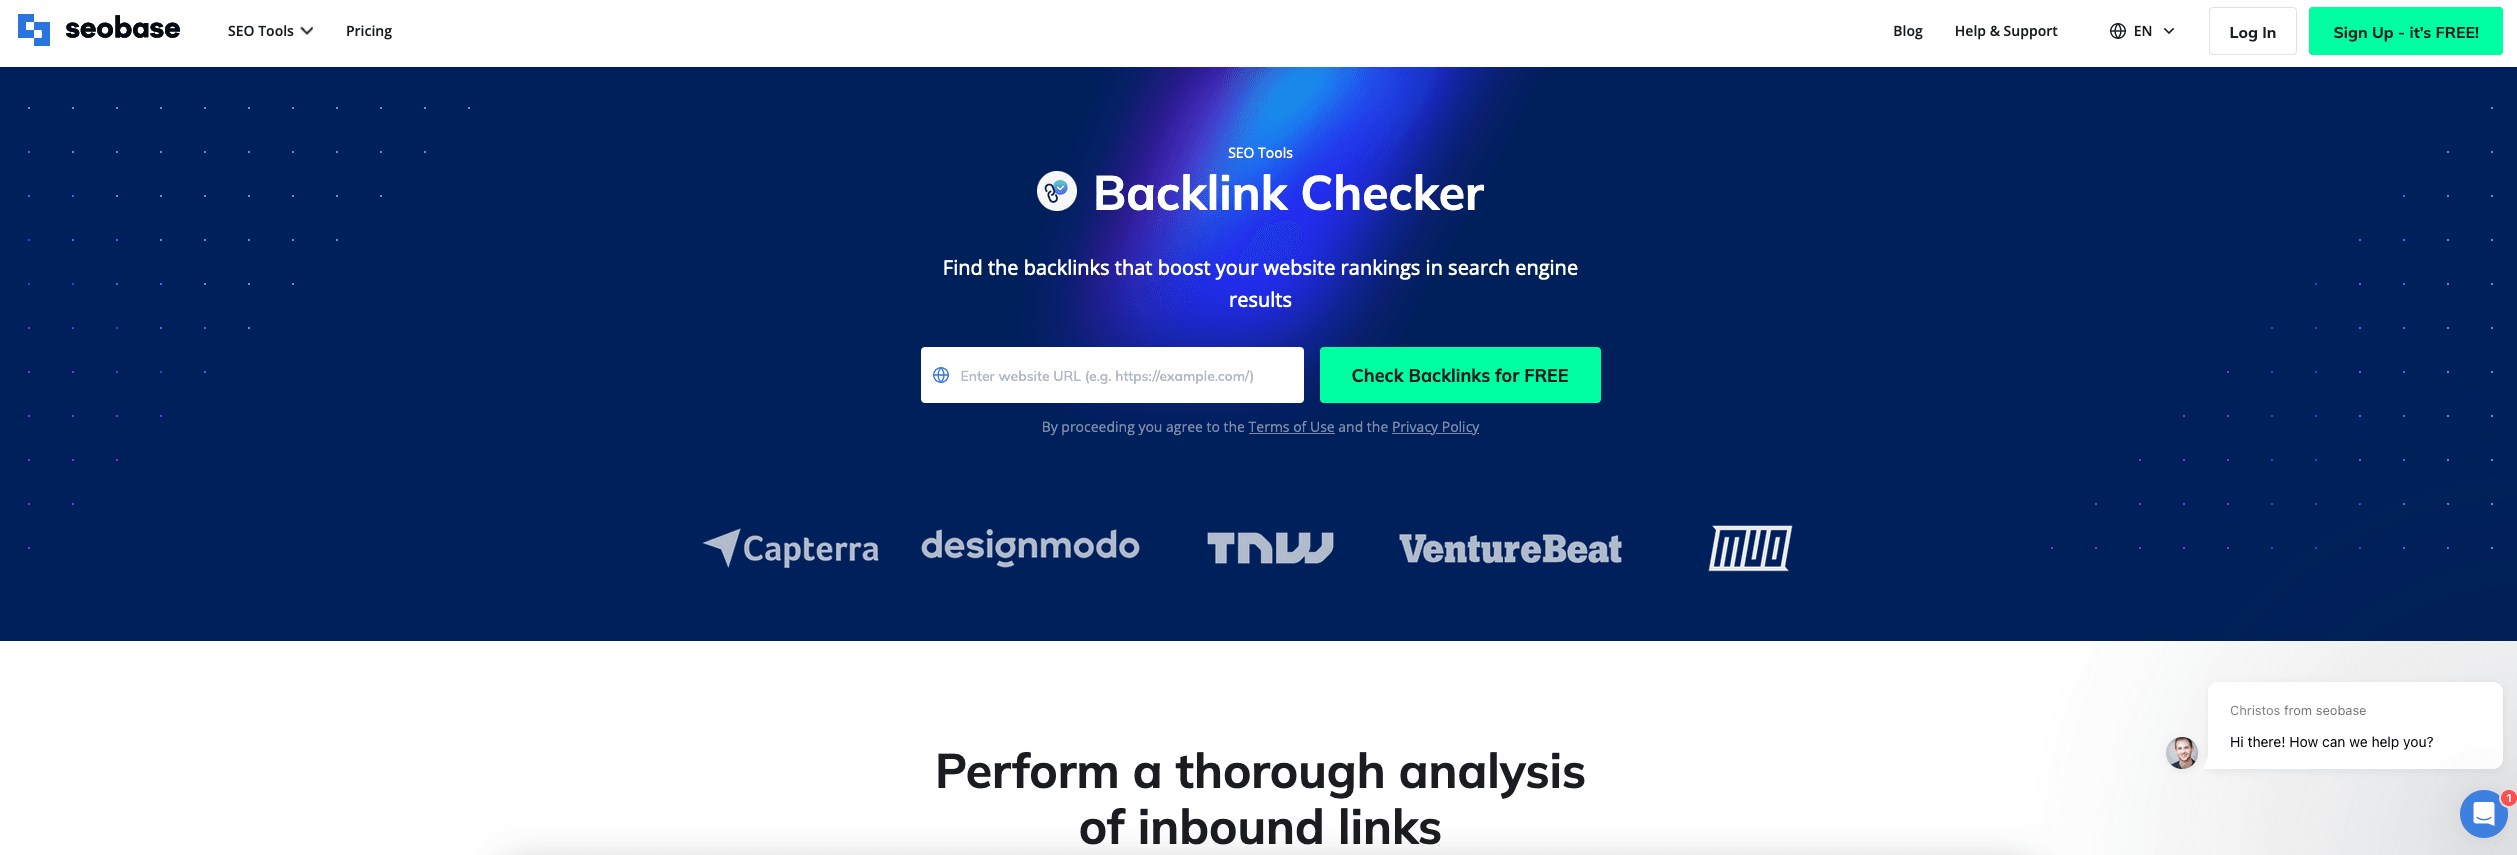 seobase backlink checker tool